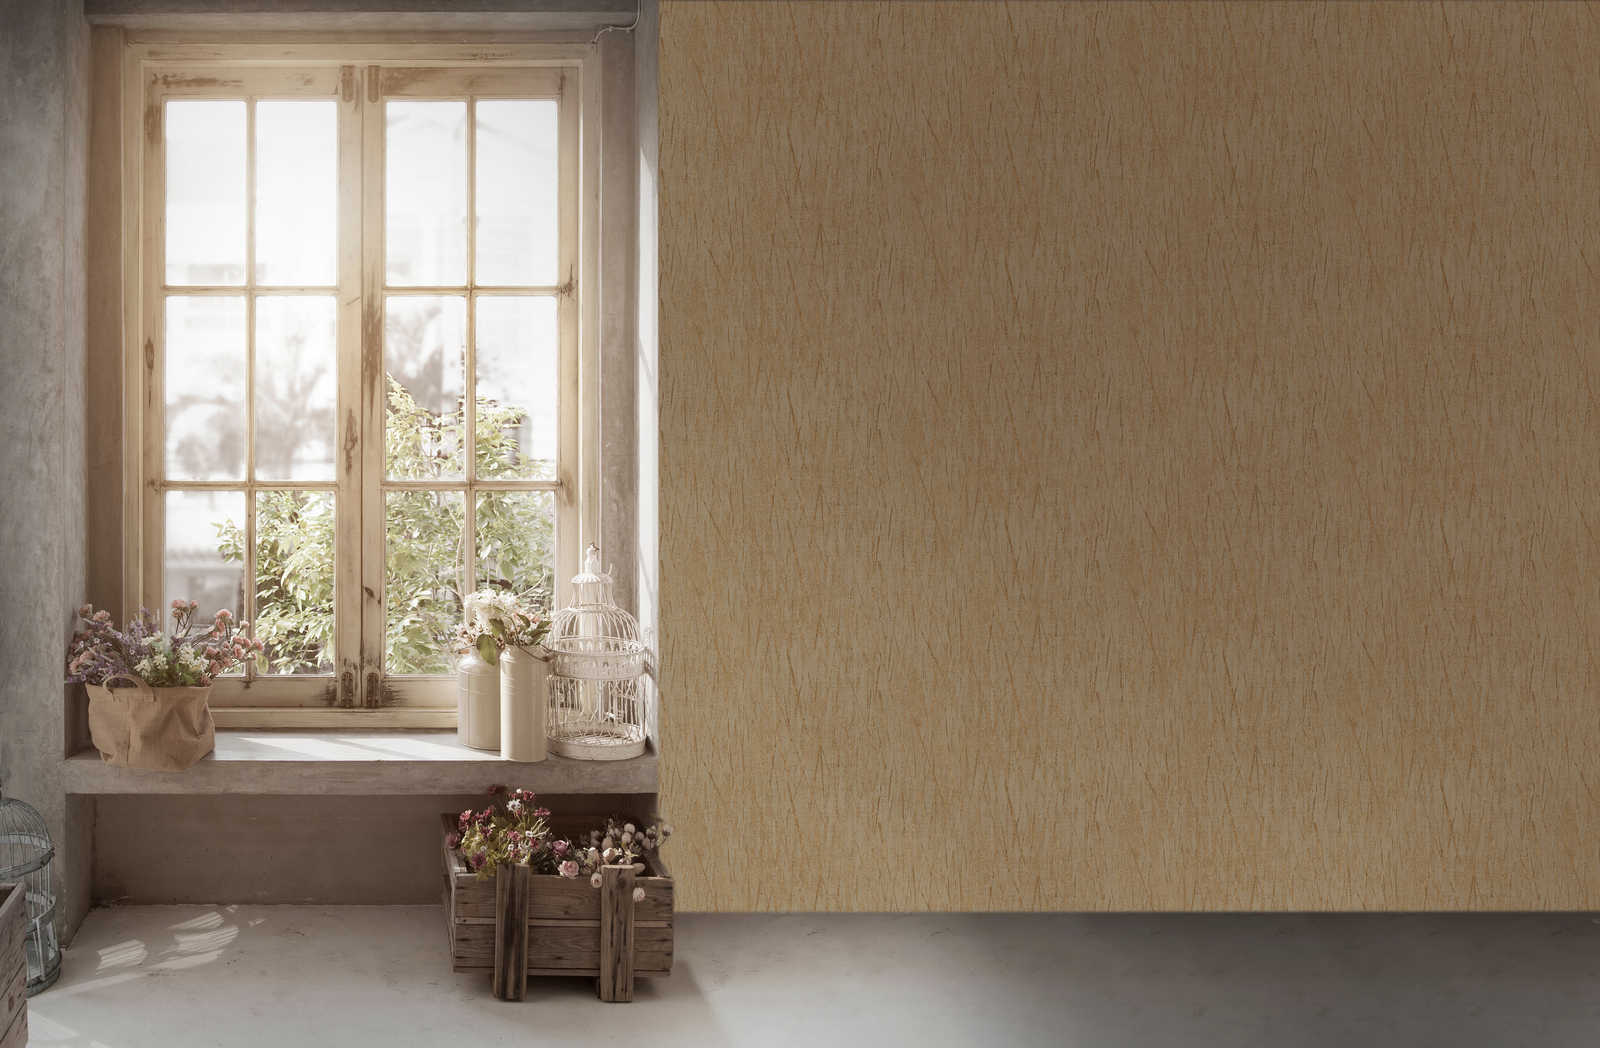             Non-woven wallpaper with nature design unt metallic effect - brown
        